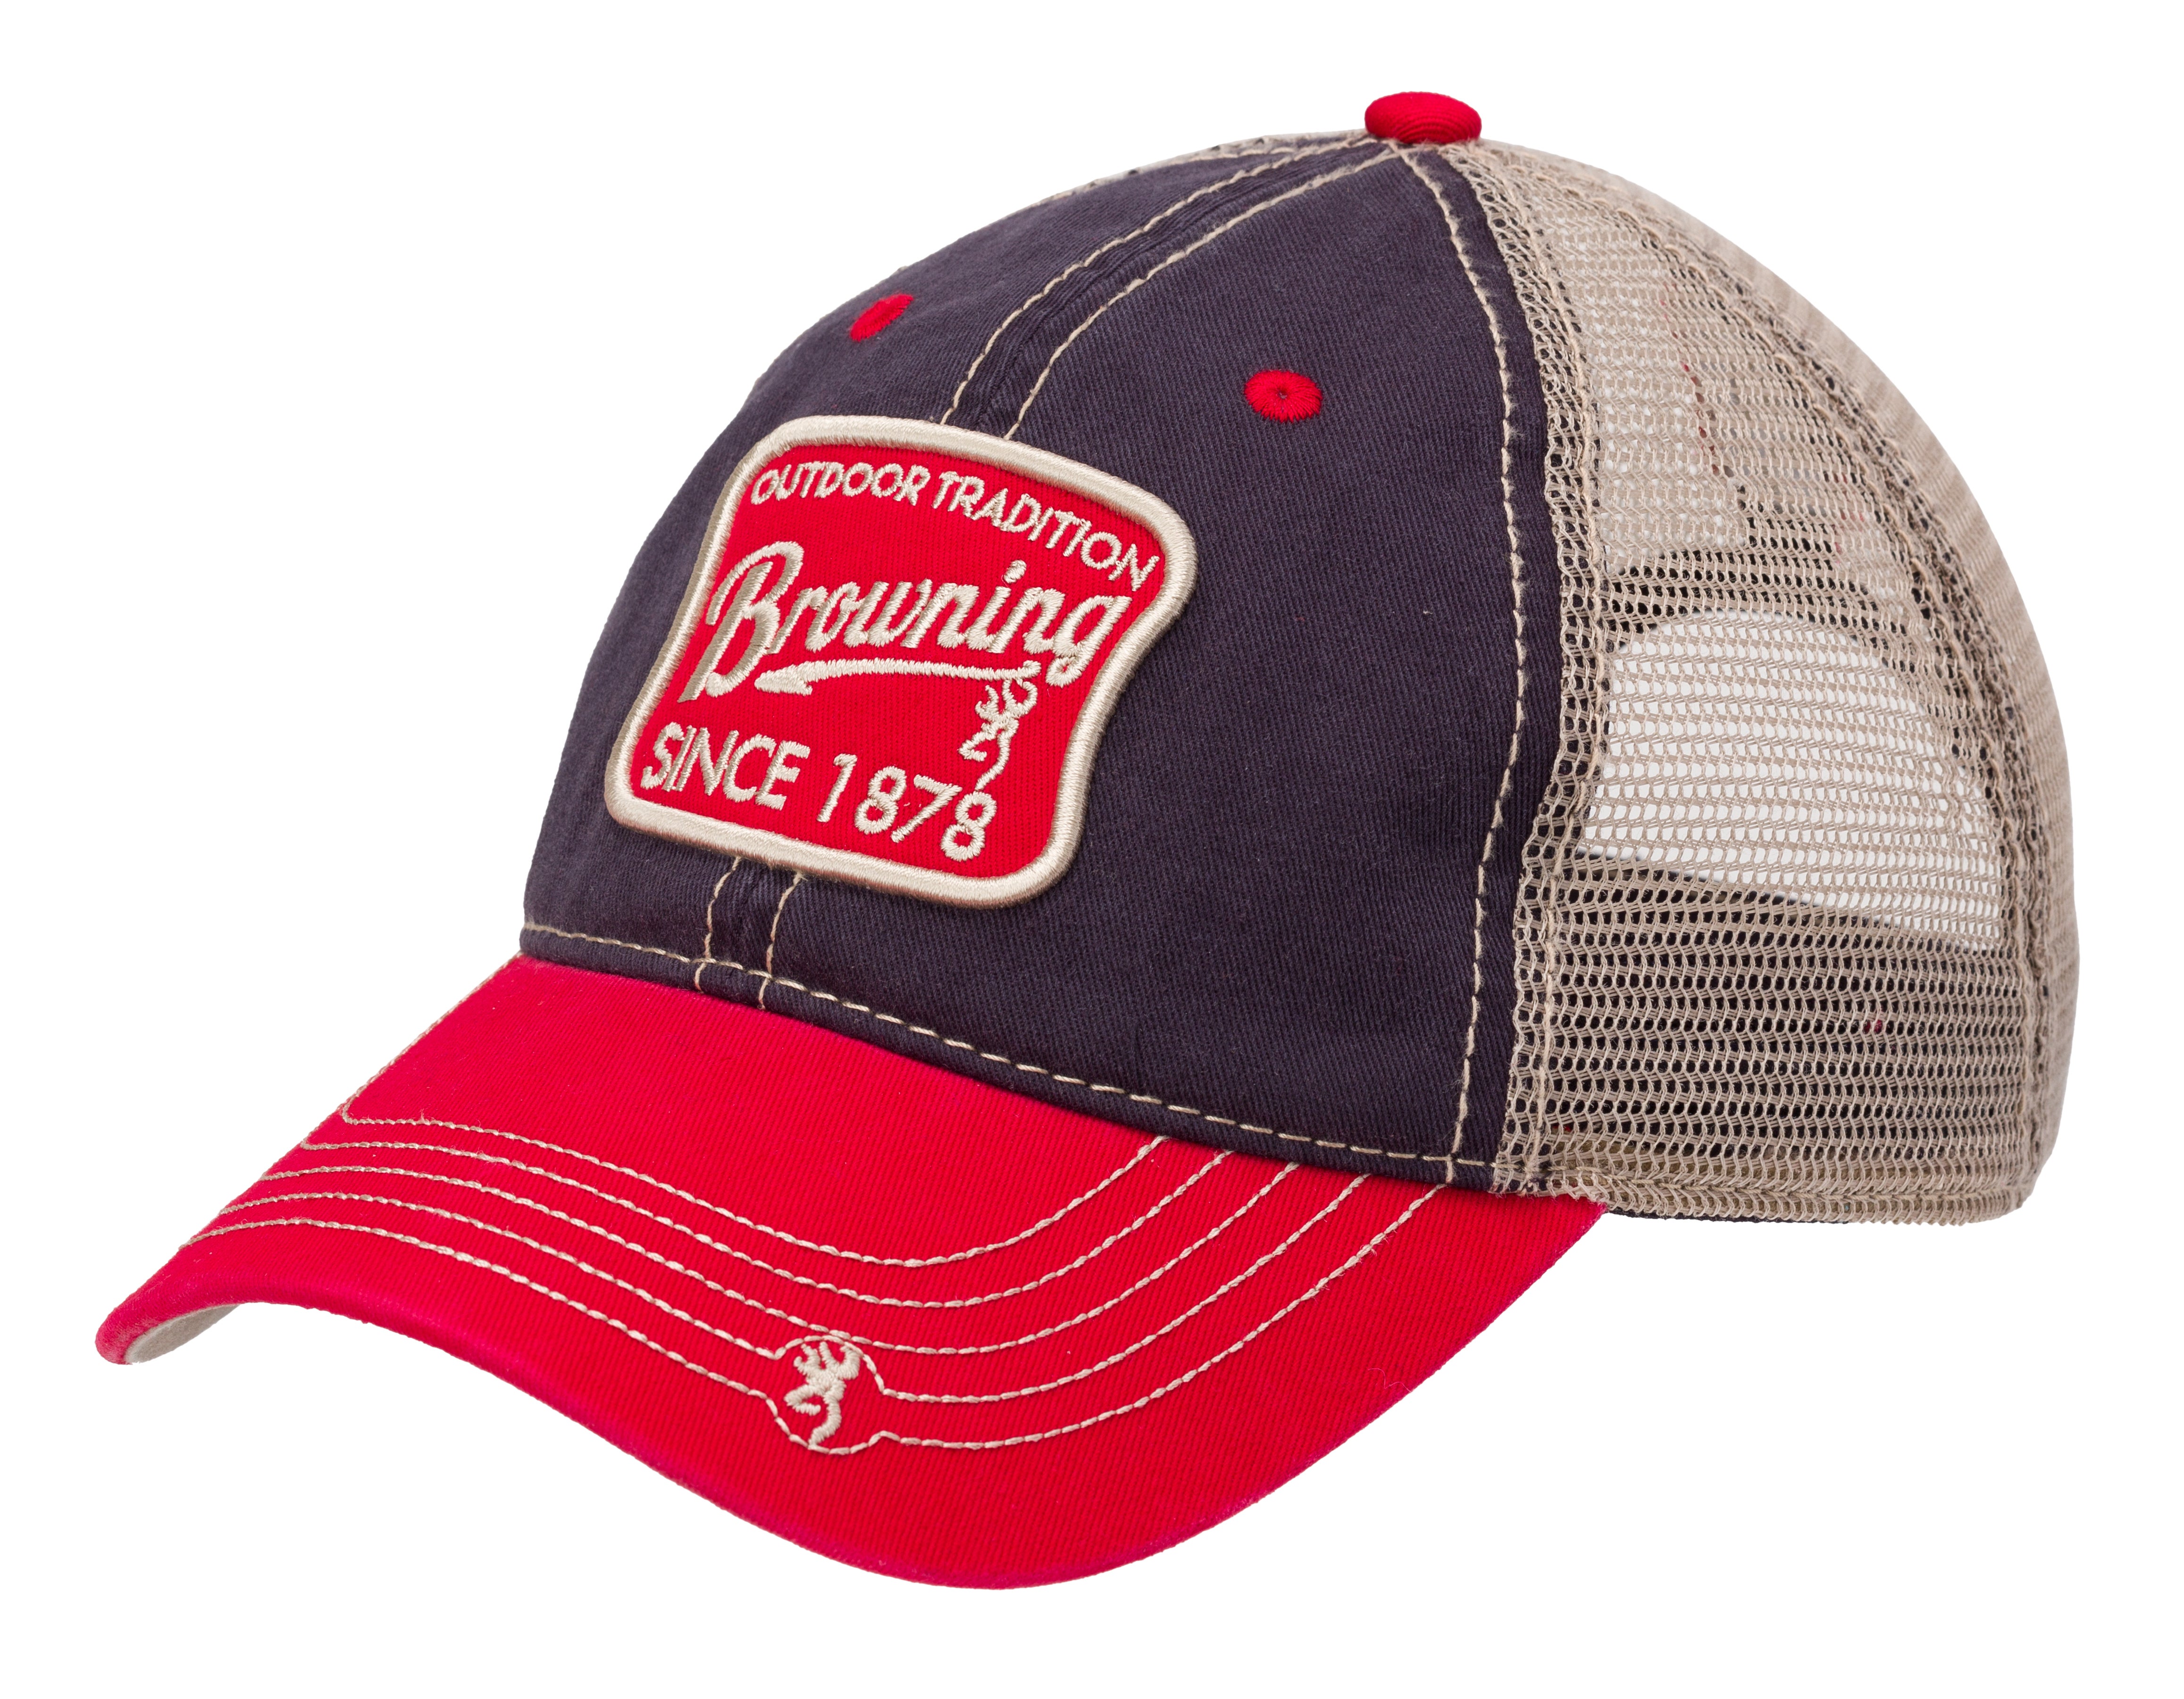 Trenton - Black/Red Cap - Casual Hat - Browning